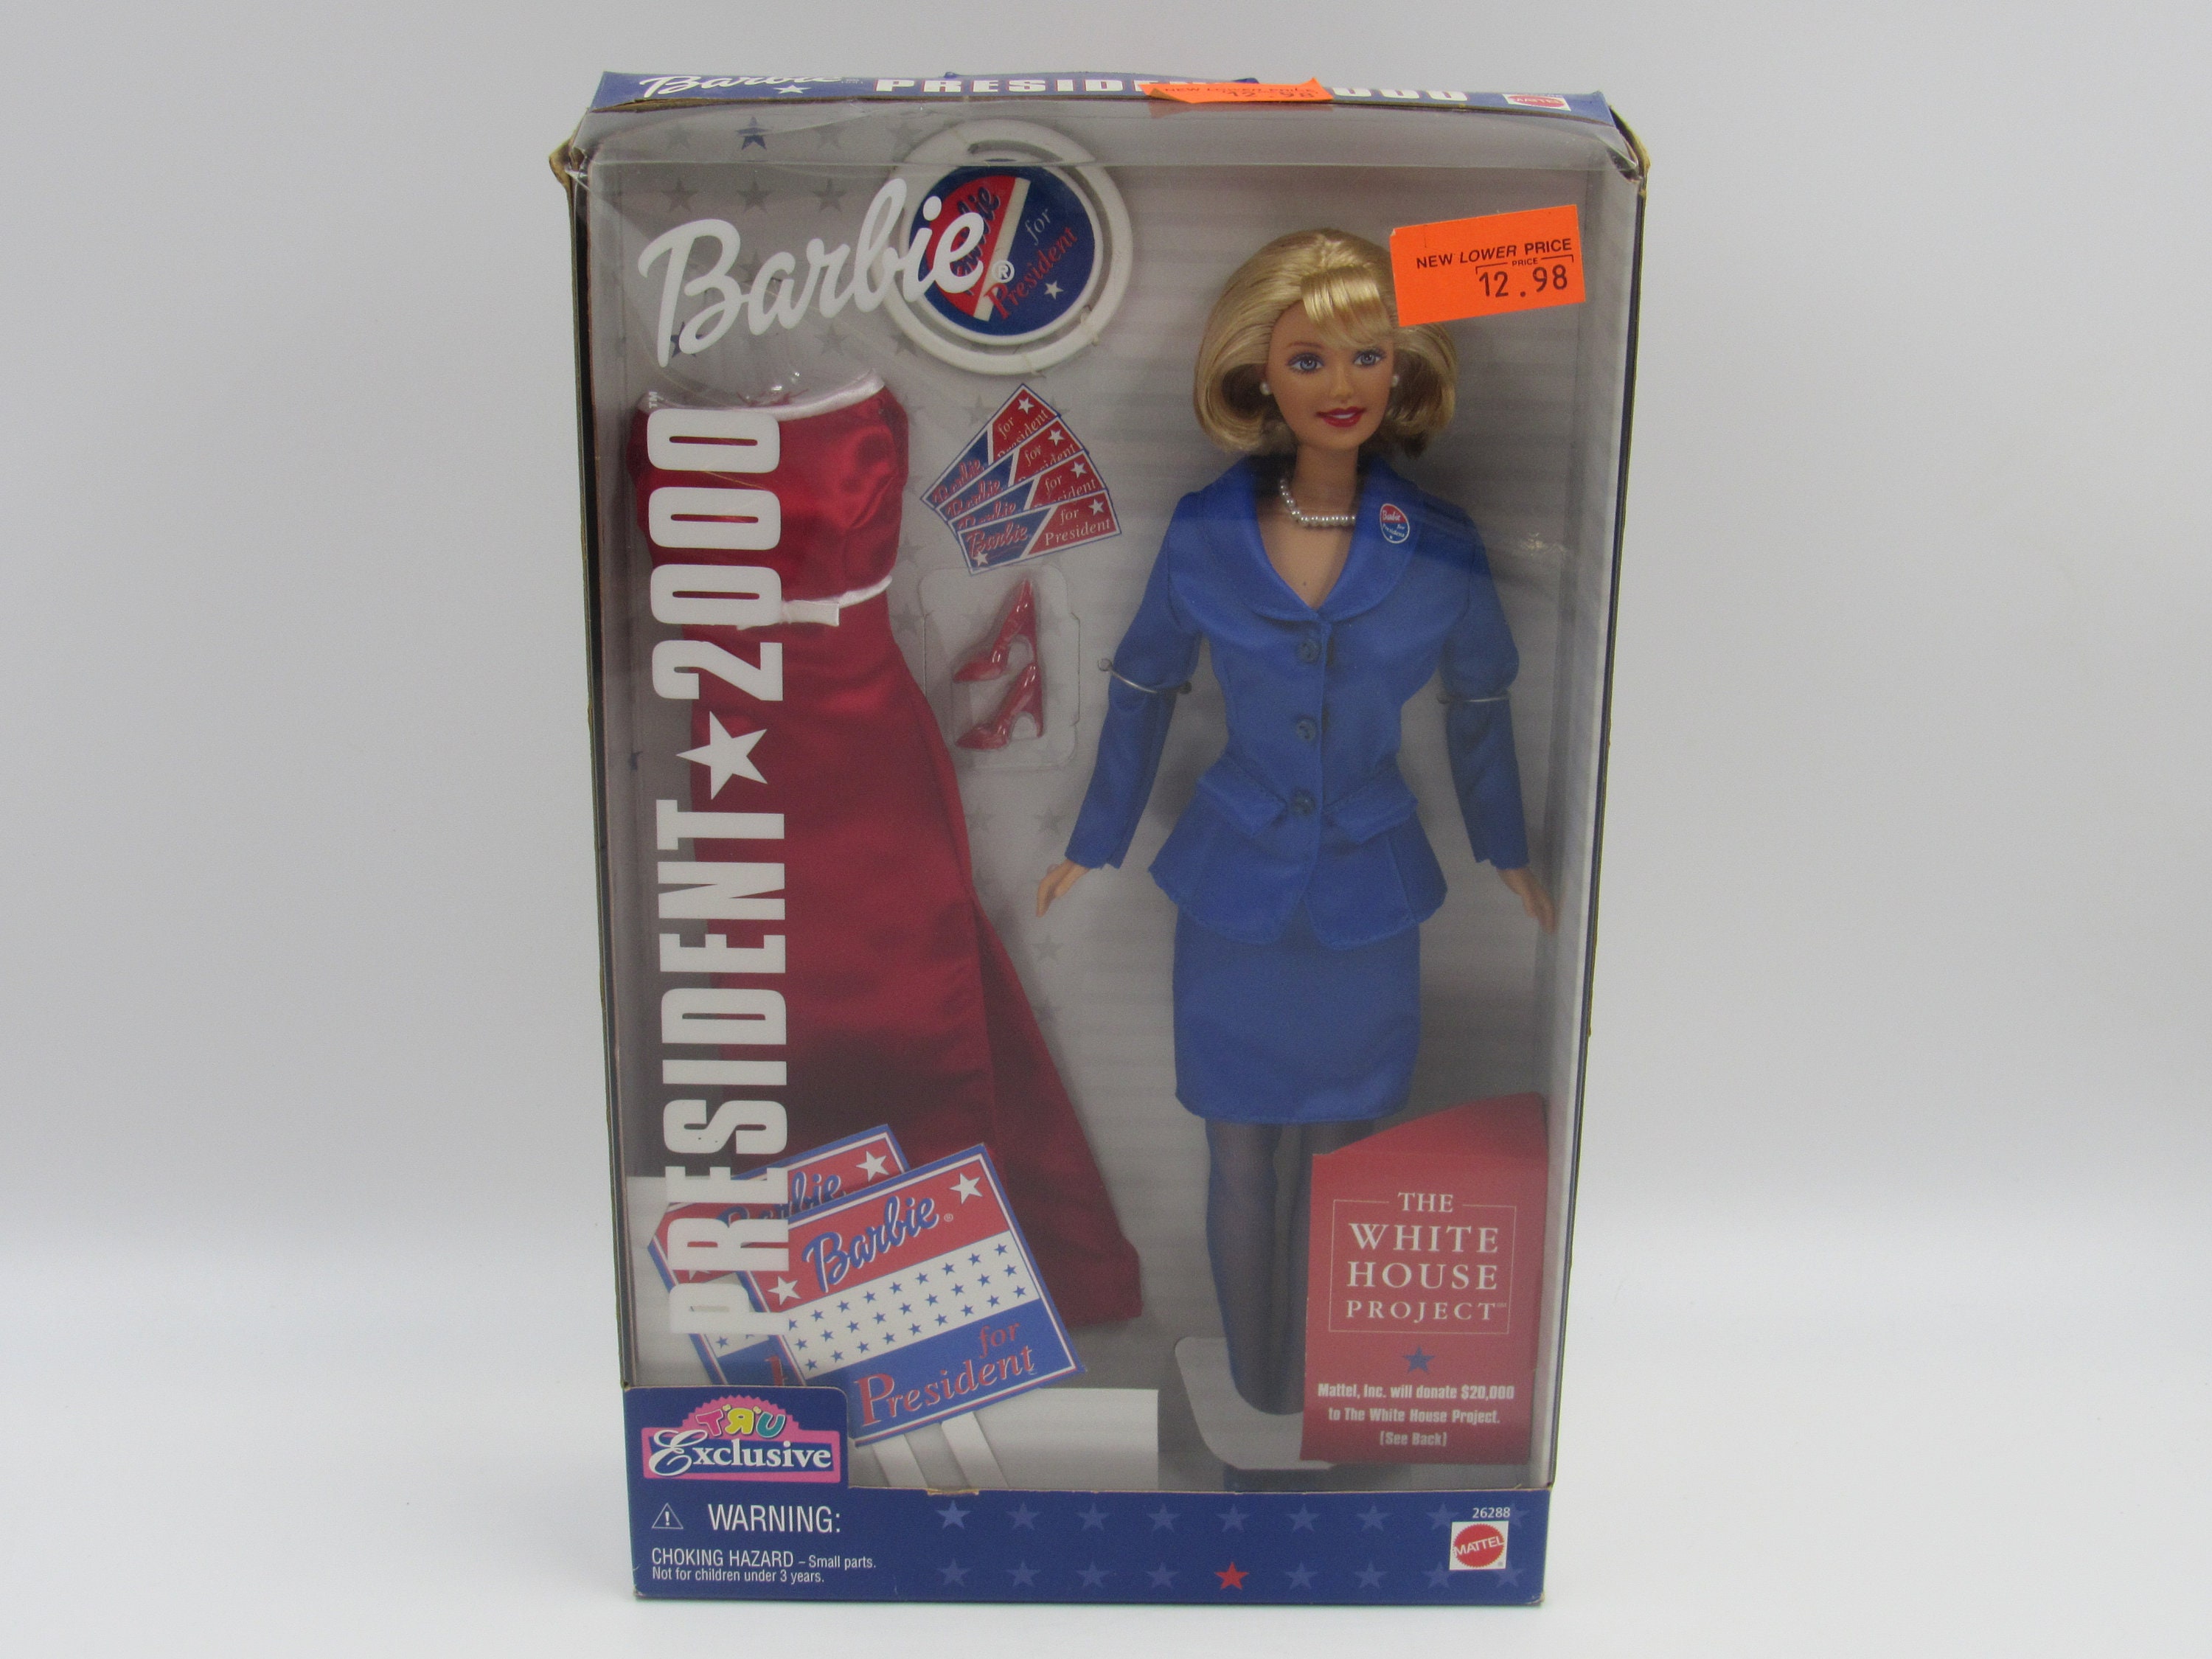 schuld Onschuld Schoolonderwijs President 2000 Barbie Doll TRU Exclusive Mattel New in Box - Etsy Denmark